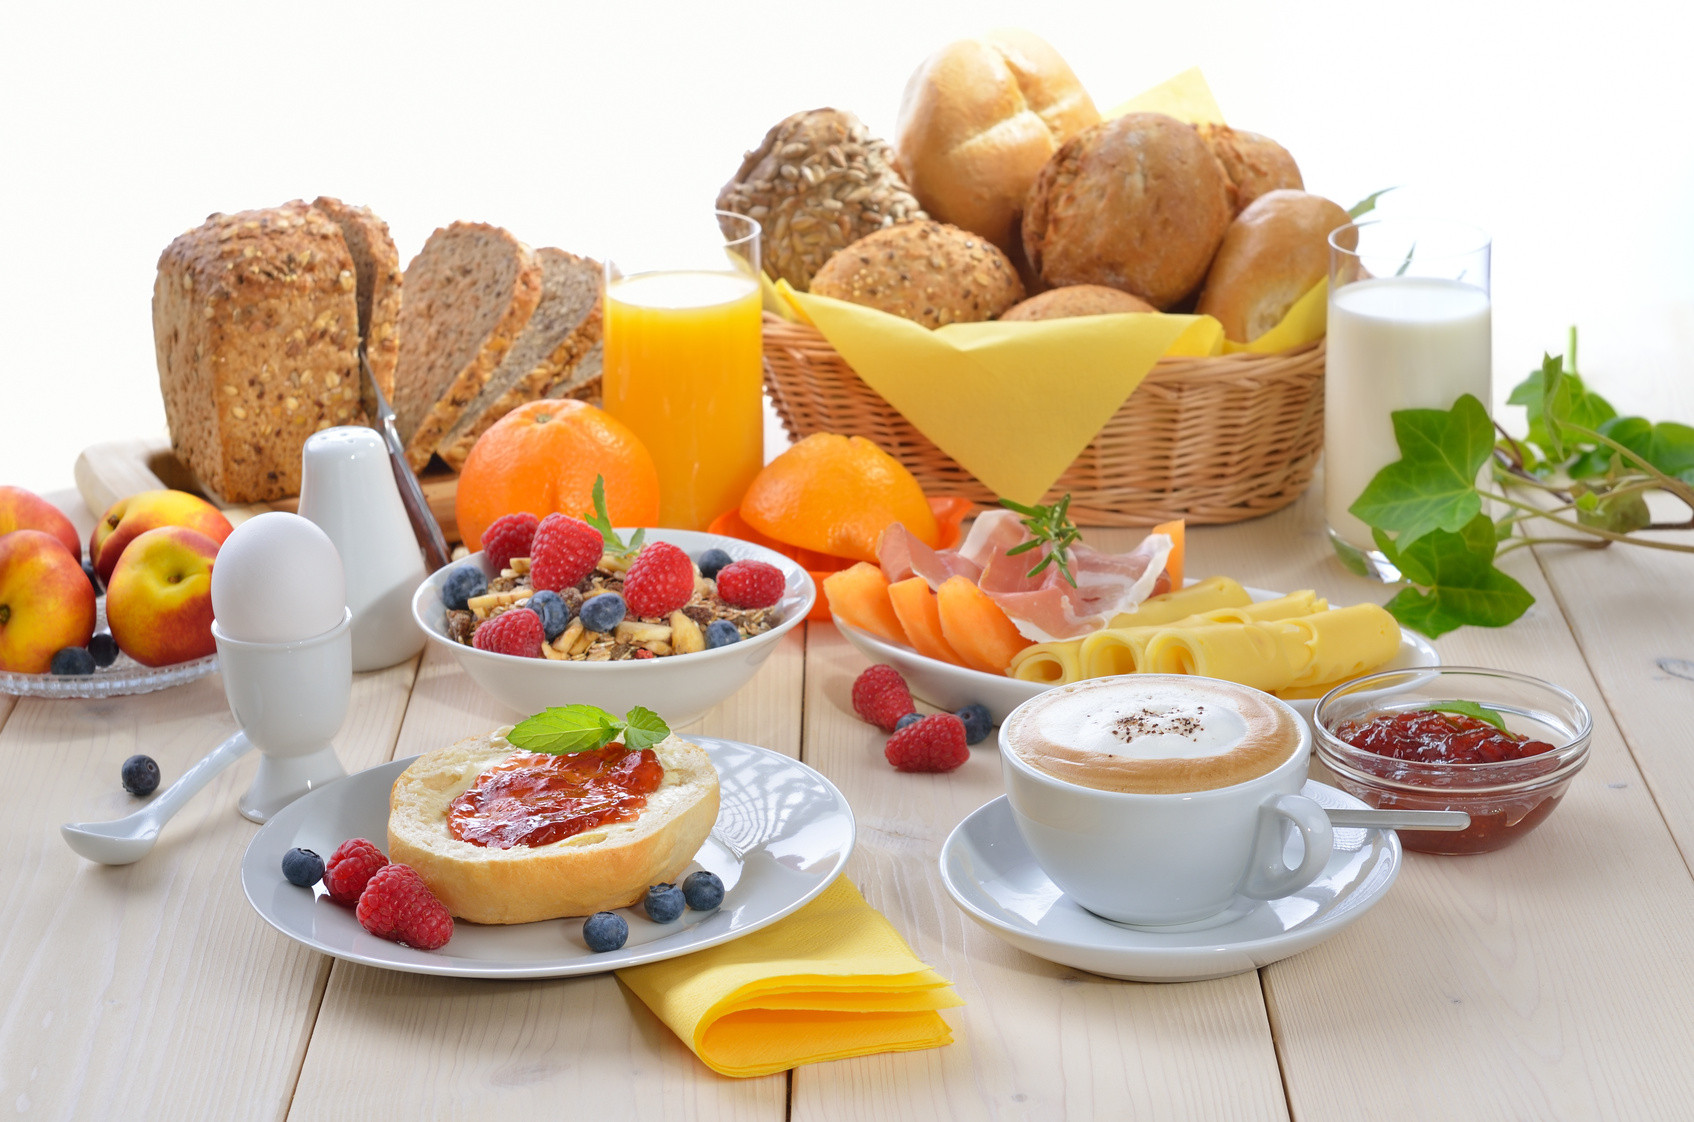 Healthy Breakfast Pictures
 Top 20 Healthy Breakfast Ideas For Winter eBlogfa